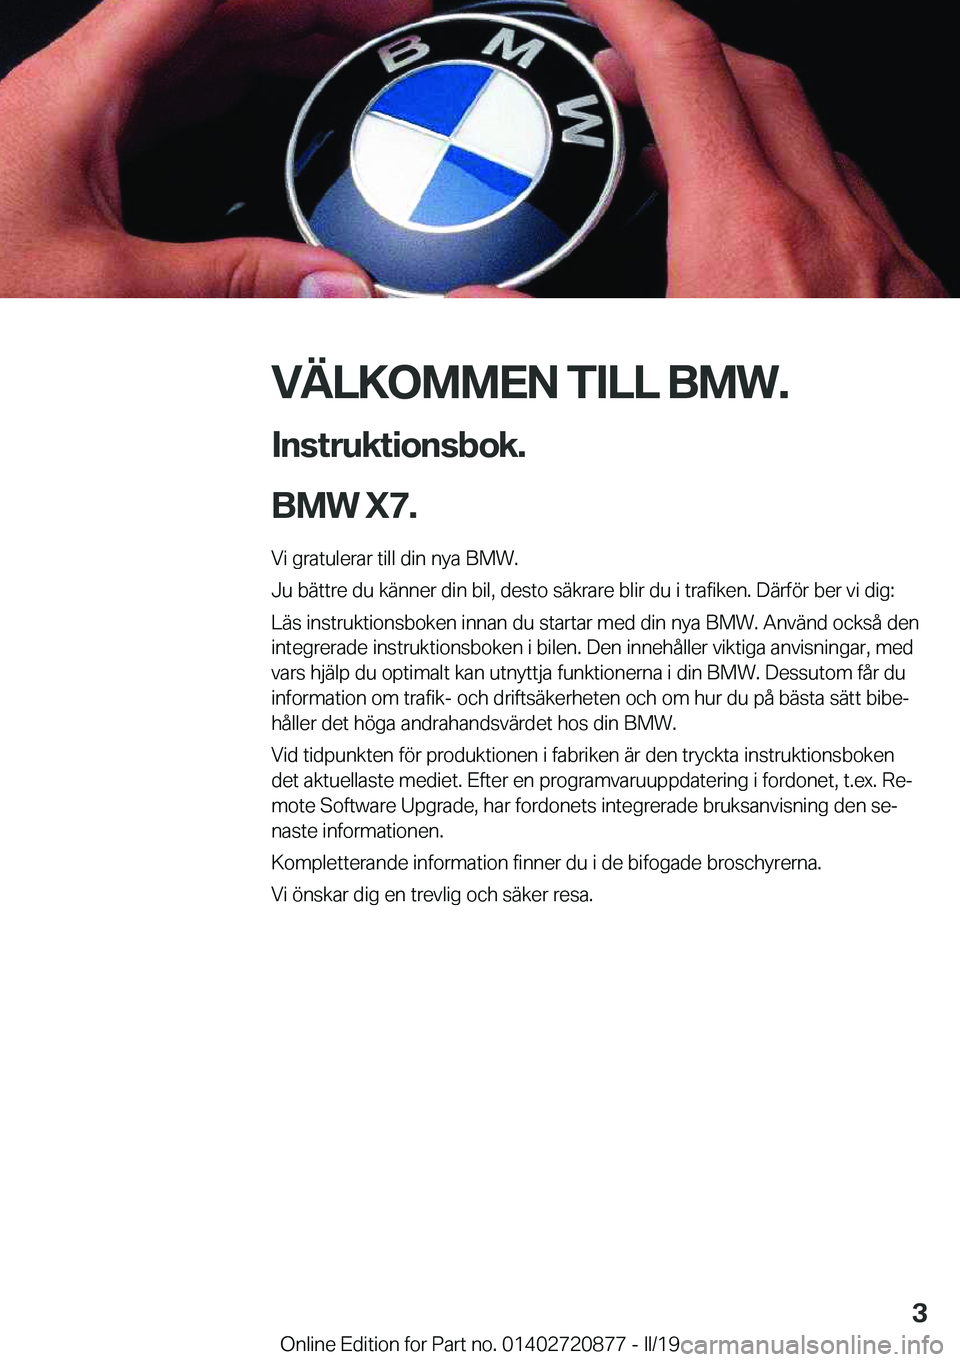 BMW X7 2019  InstruktionsbÖcker (in Swedish) �V�Ä�L�K�O�M�M�E�N��T�I�L�L��B�M�W�.�I�n�s�t�r�u�k�t�i�o�n�s�b�o�k�.
�B�M�W��X�7�.
�V�i��g�r�a�t�u�l�e�r�a�r��t�i�l�l��d�i�n��n�y�a��B�M�W�.
�J�u��b�ä�t�t�r�e��d�u��k�ä�n�n�e�r��d�i�n�